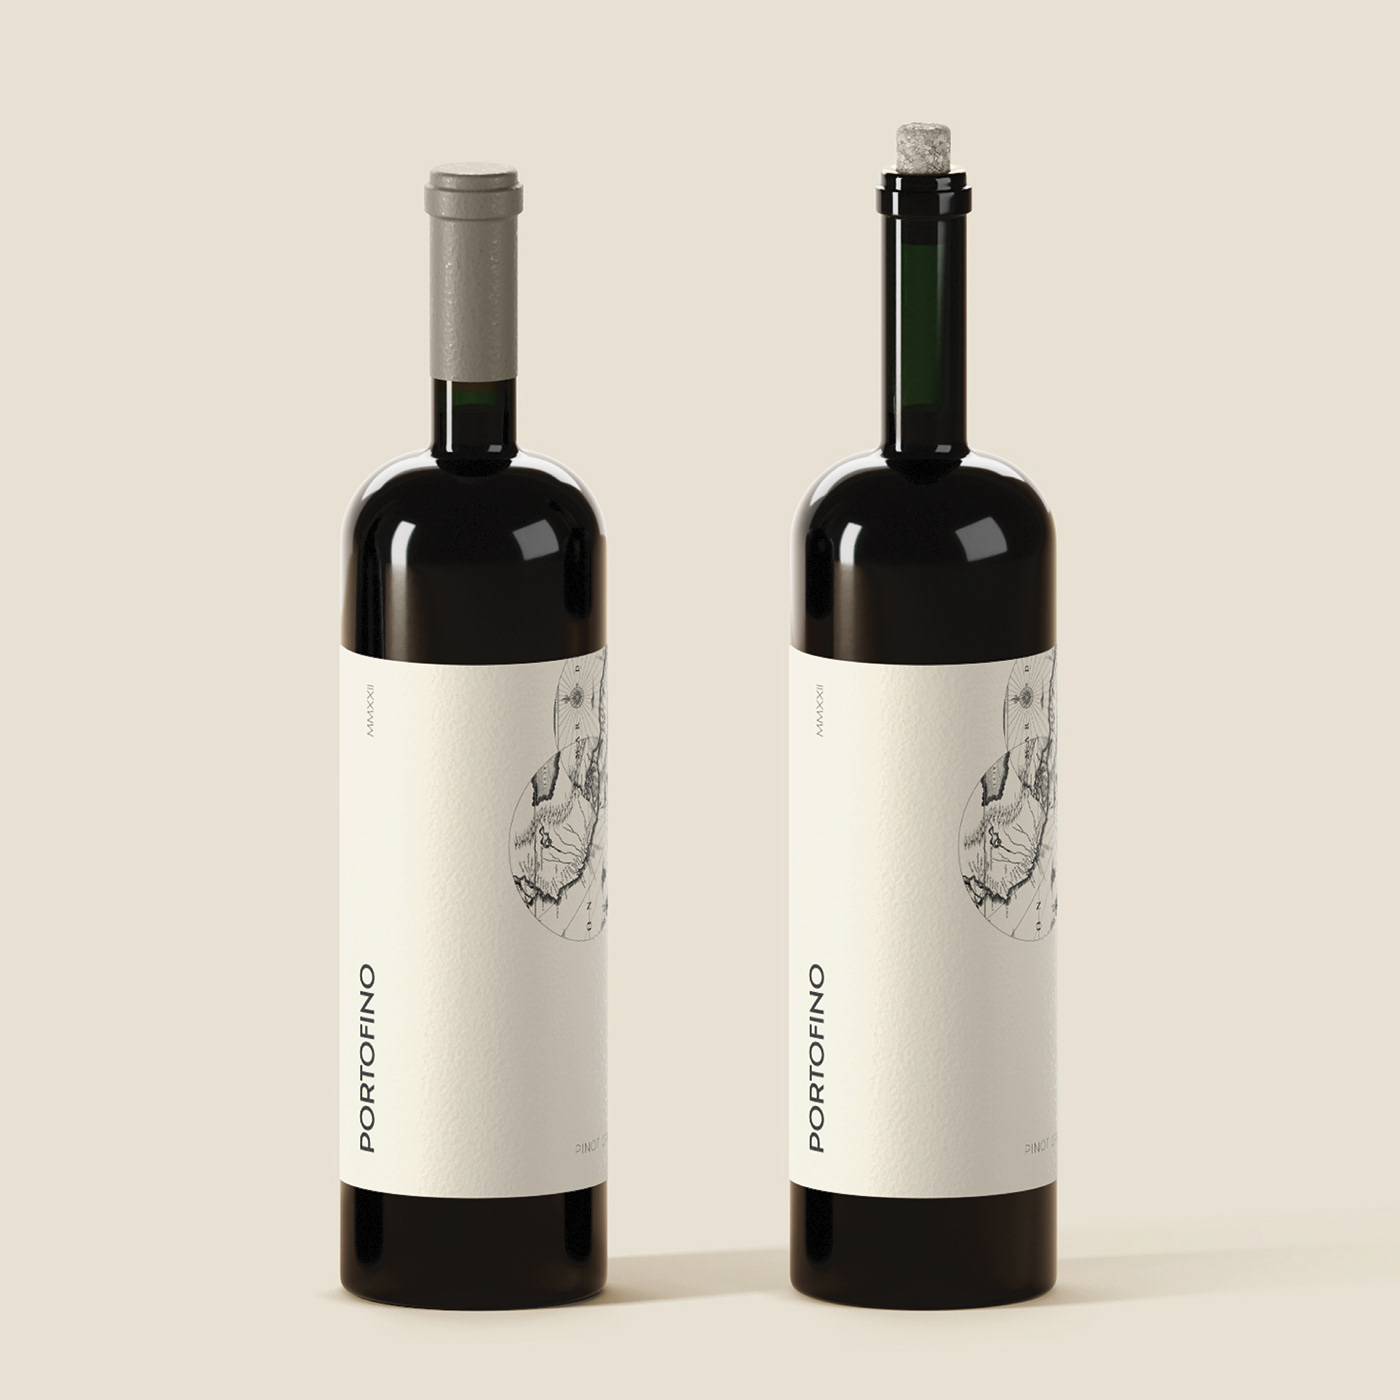 packaging design brand identity wine wine label visual identity italian wine alcohol alcohol packaging Portofino